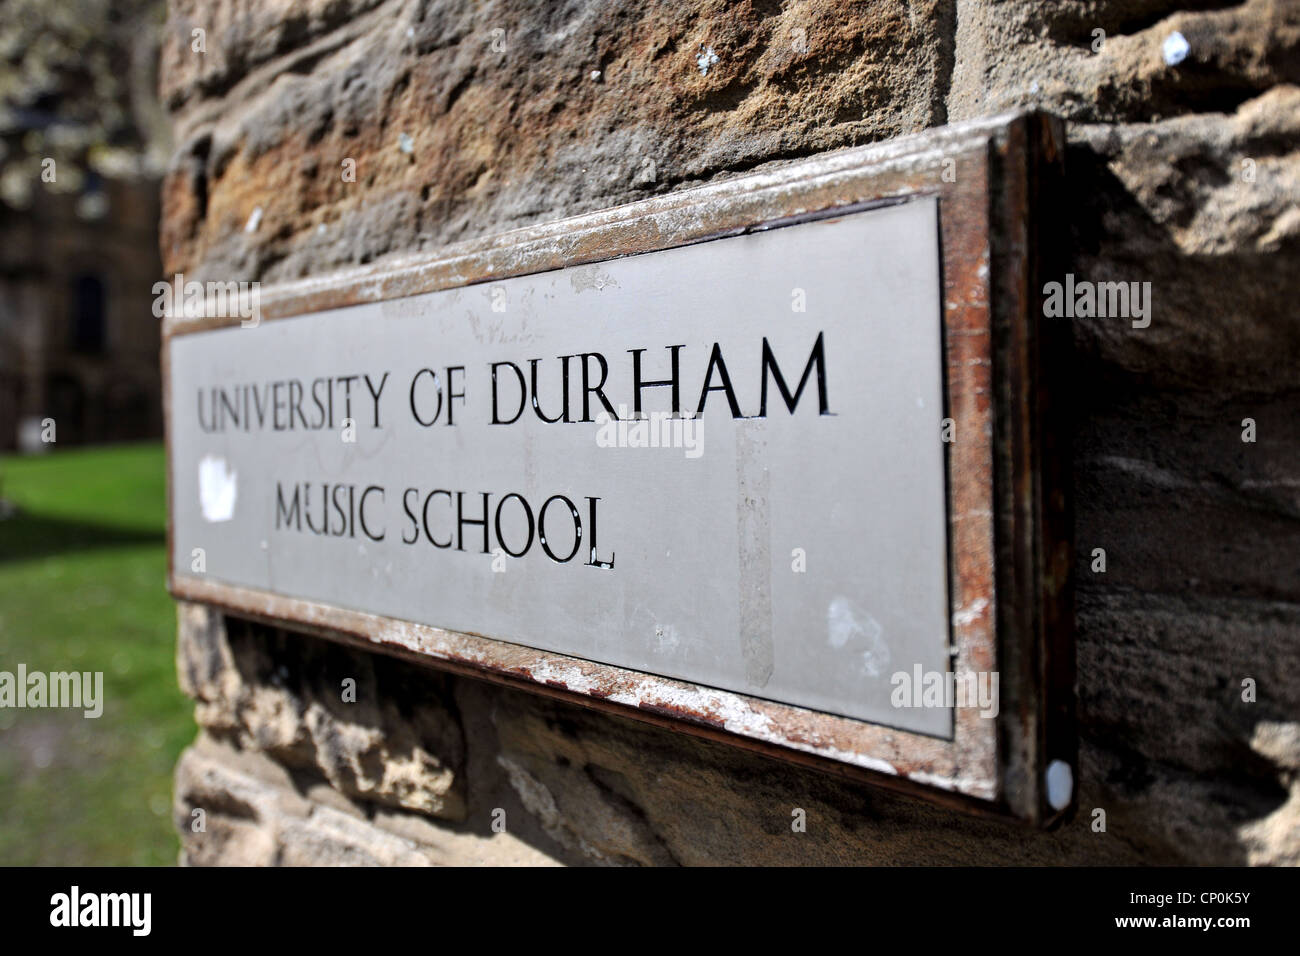 University of Durham Music school direction sign Stock Photo